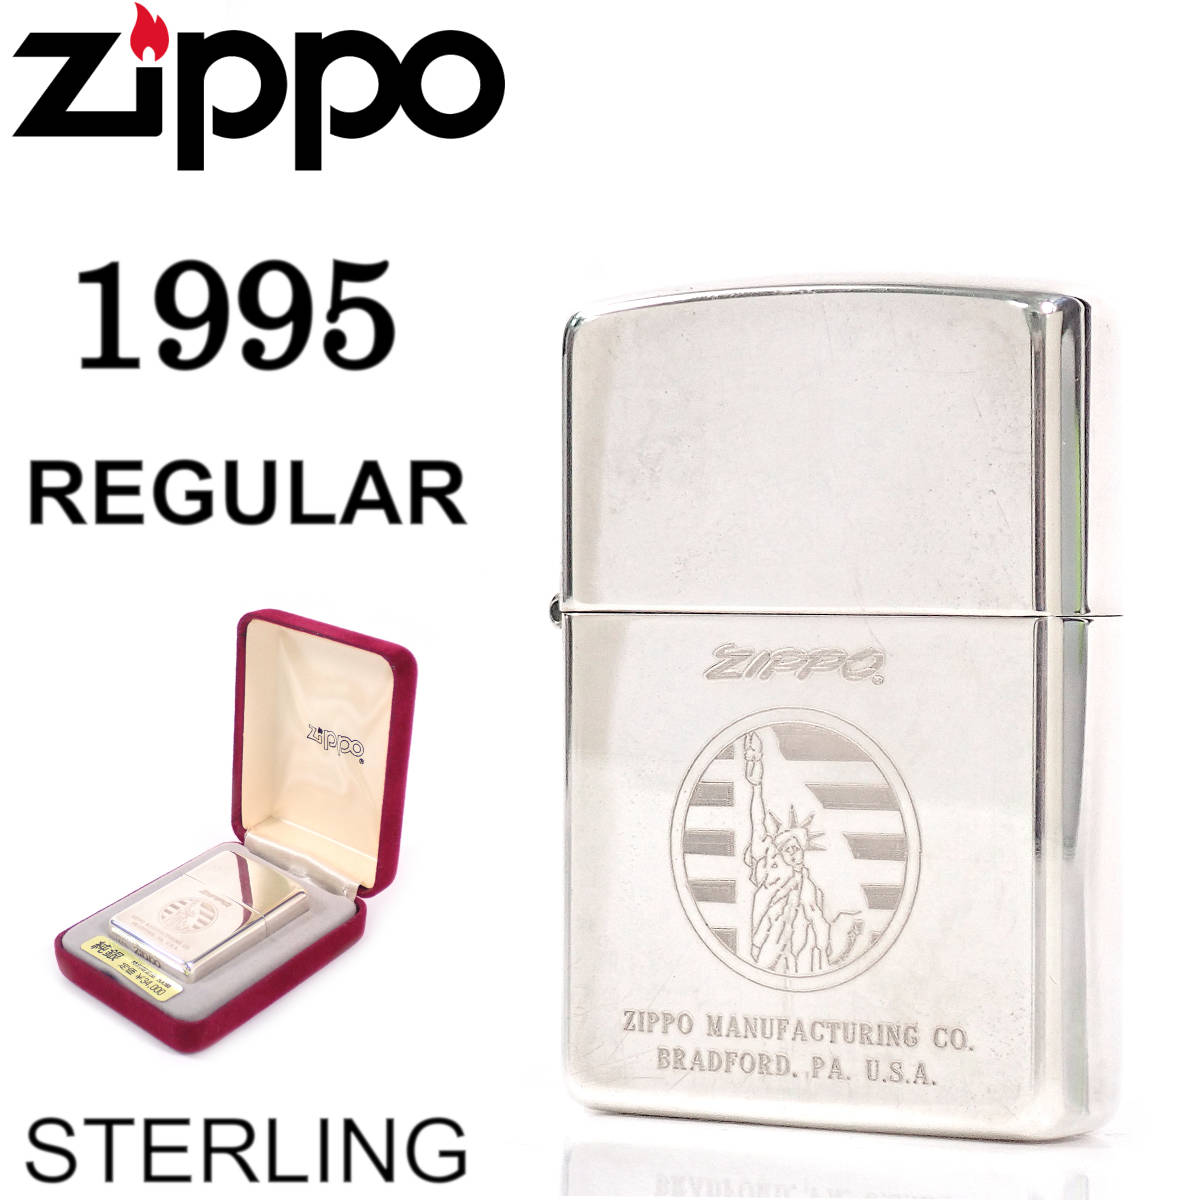 Zippo The Statue of Liberty Sterling Silver LIMITED EDITION 1995年 ジッポ レギュラー スターリングシルバー 自由の女神 限定500個